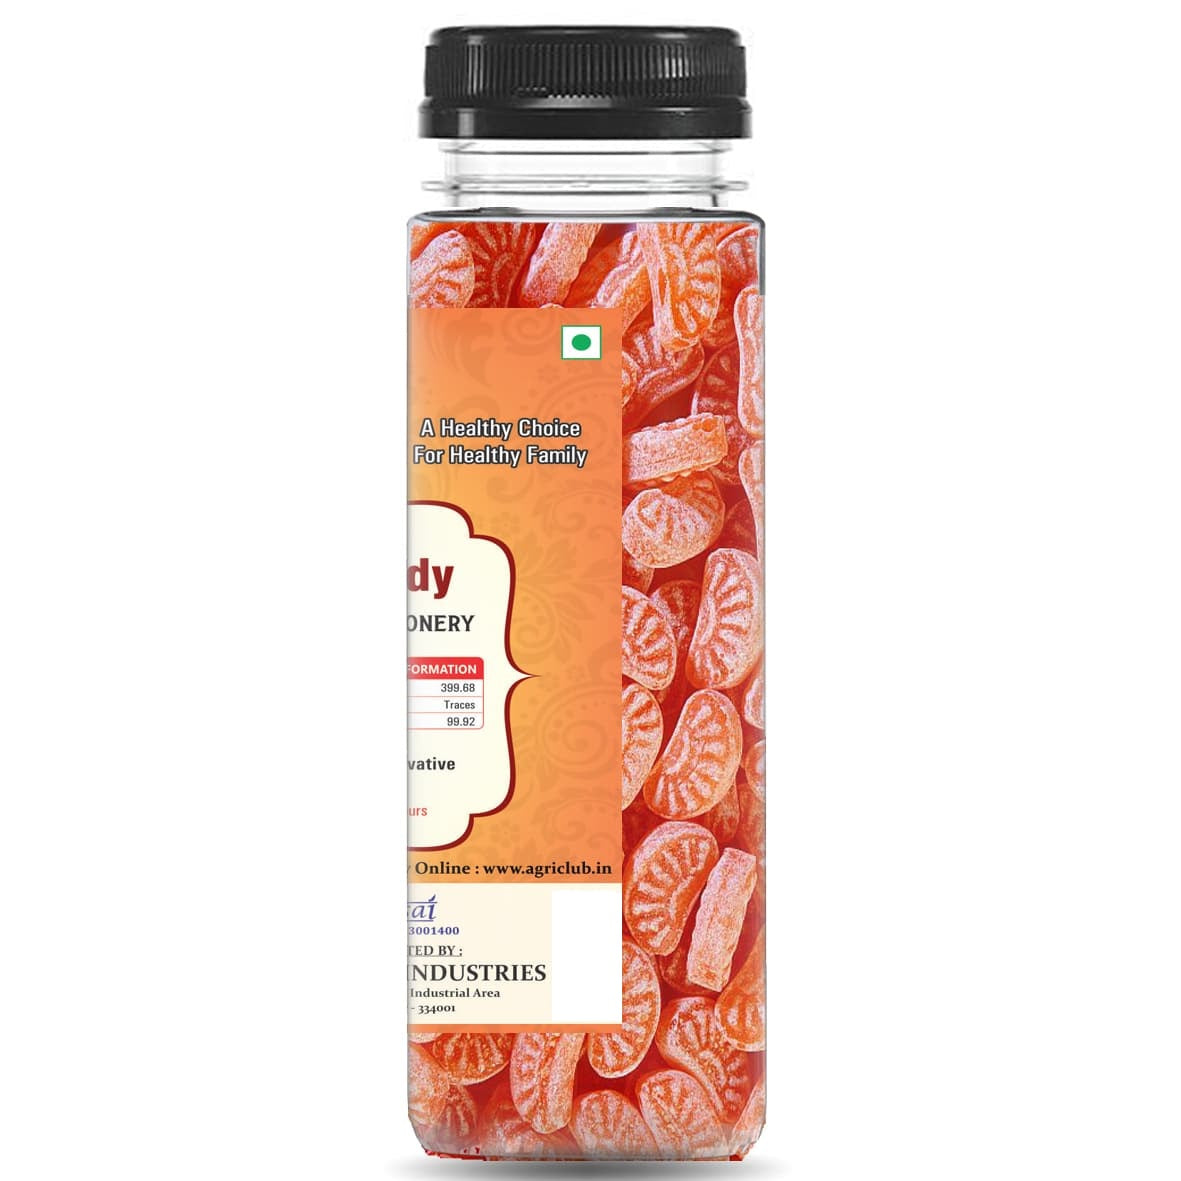 Orange Candy (Orange Flavored) 120 Gm (Pack Of 2)